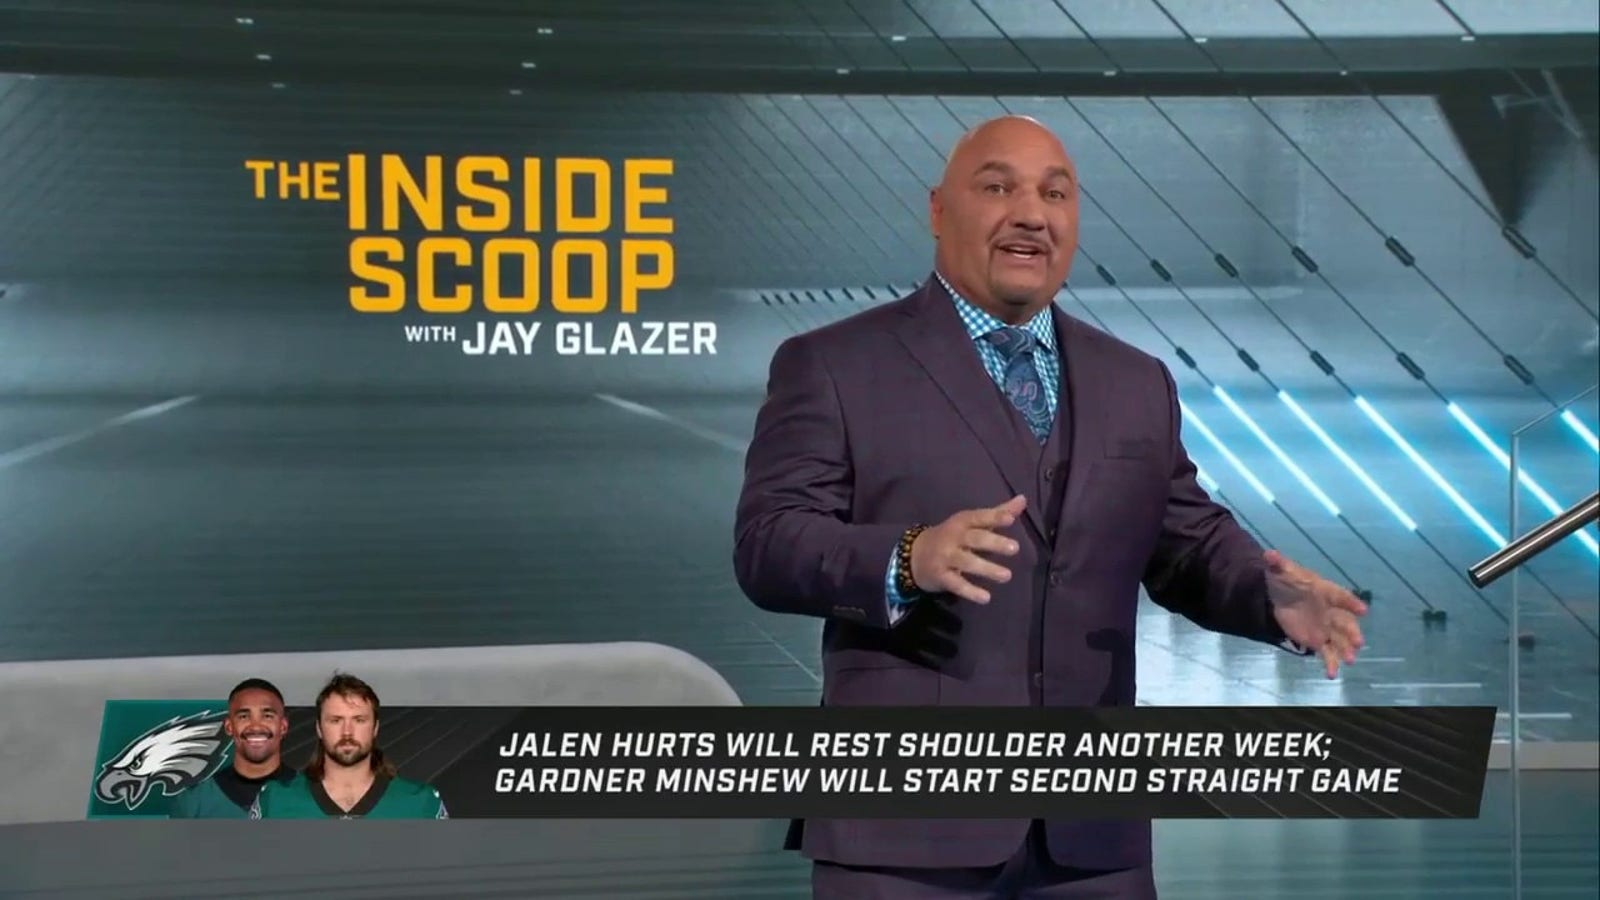 Jay Glazer updates the status of Tua Tagovailoa, Jalen Hurts, and Carson Wentz heading into NFL Week 17 